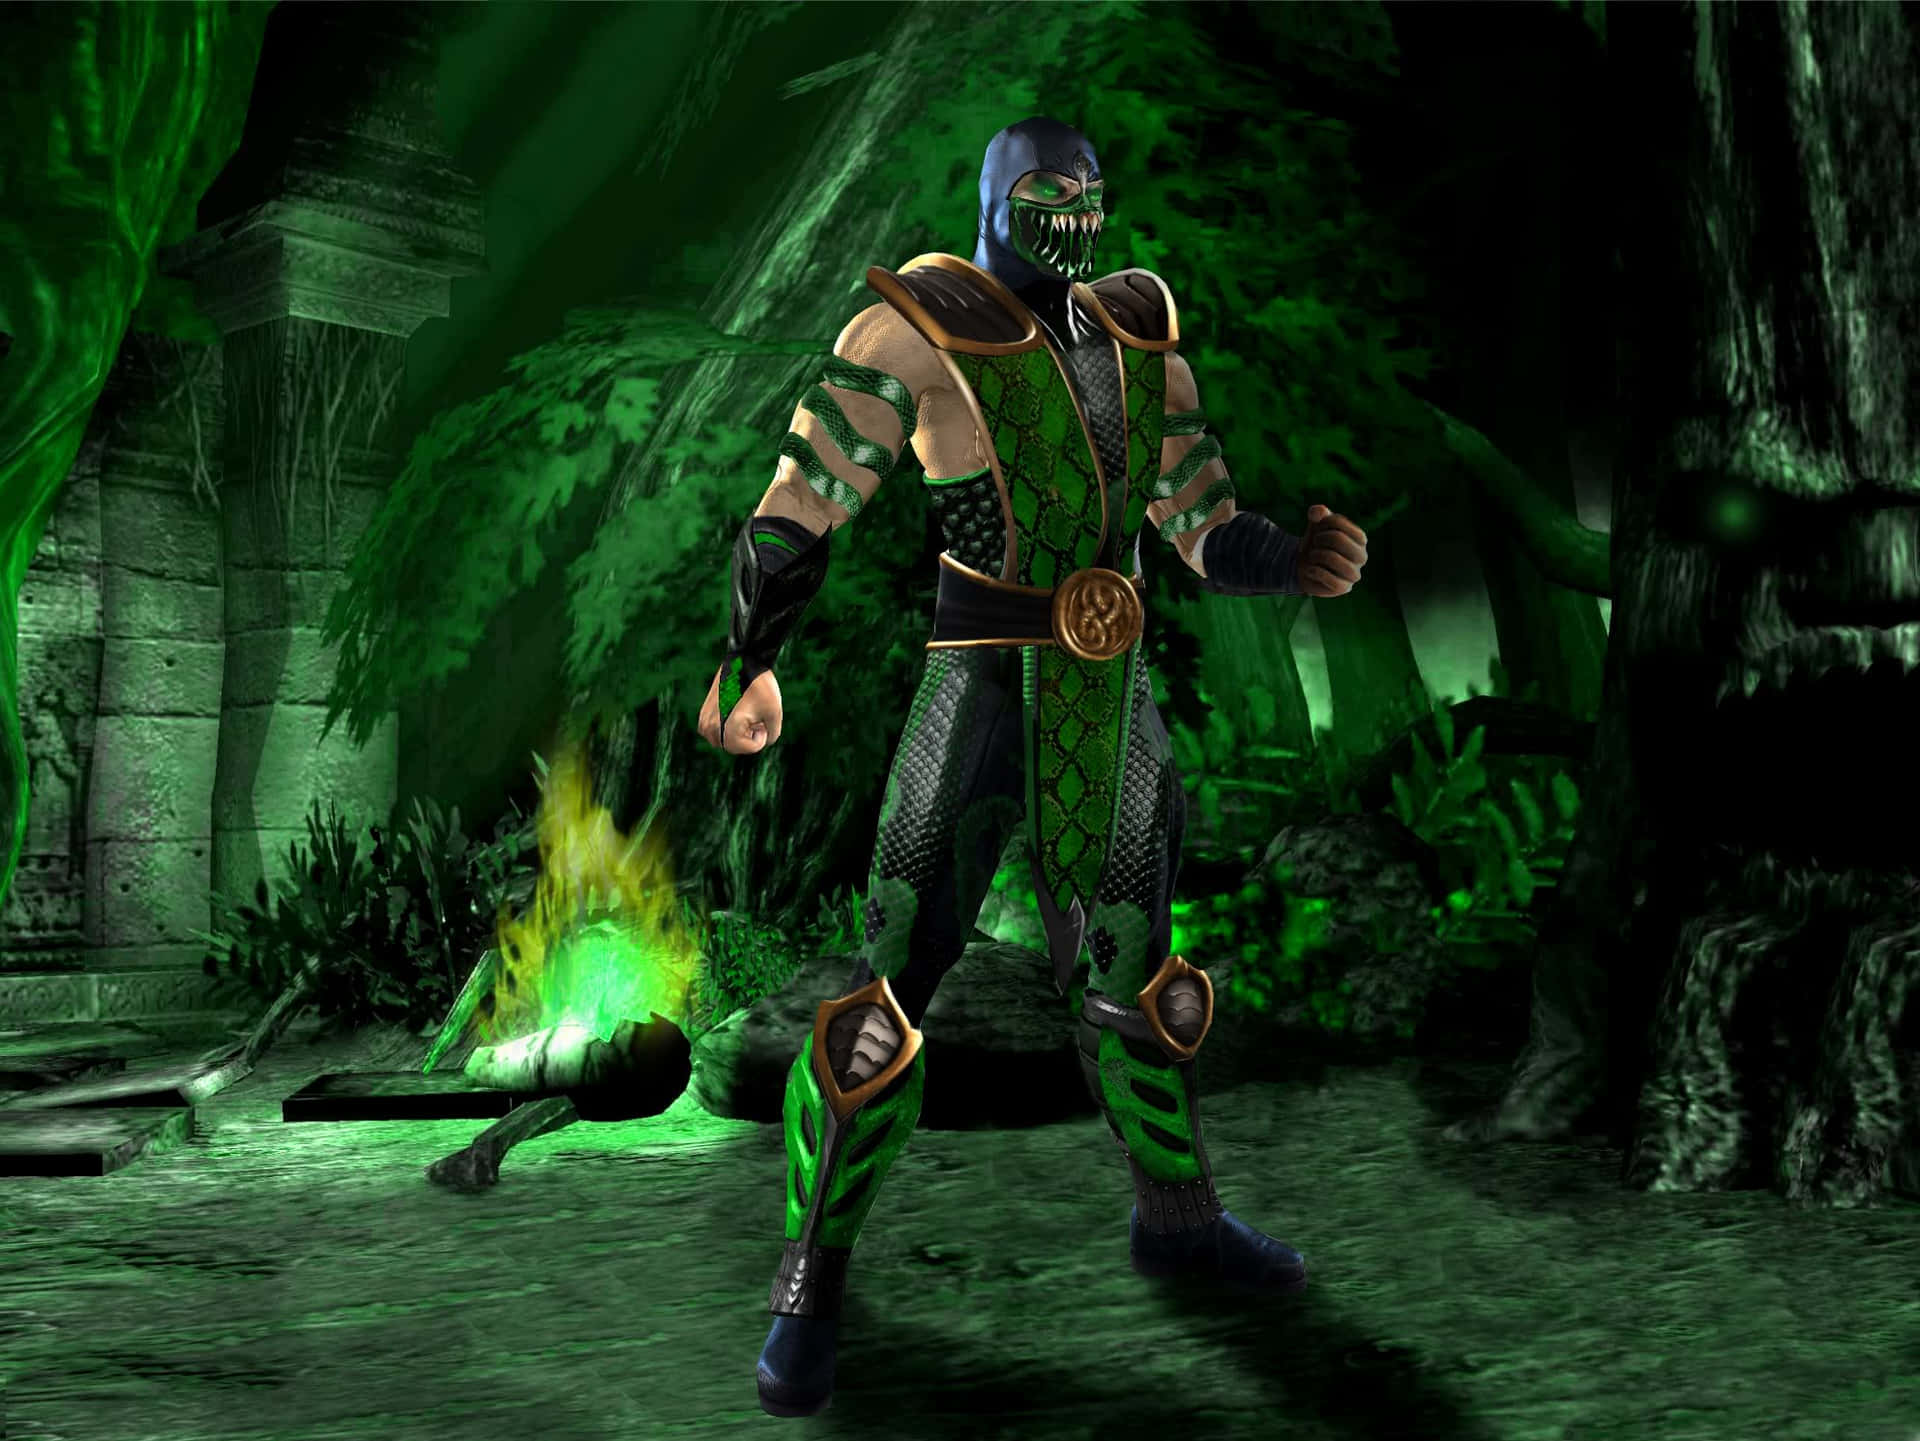 Mortal Kombat's Deadly Ninja: Reptile in Action Wallpaper